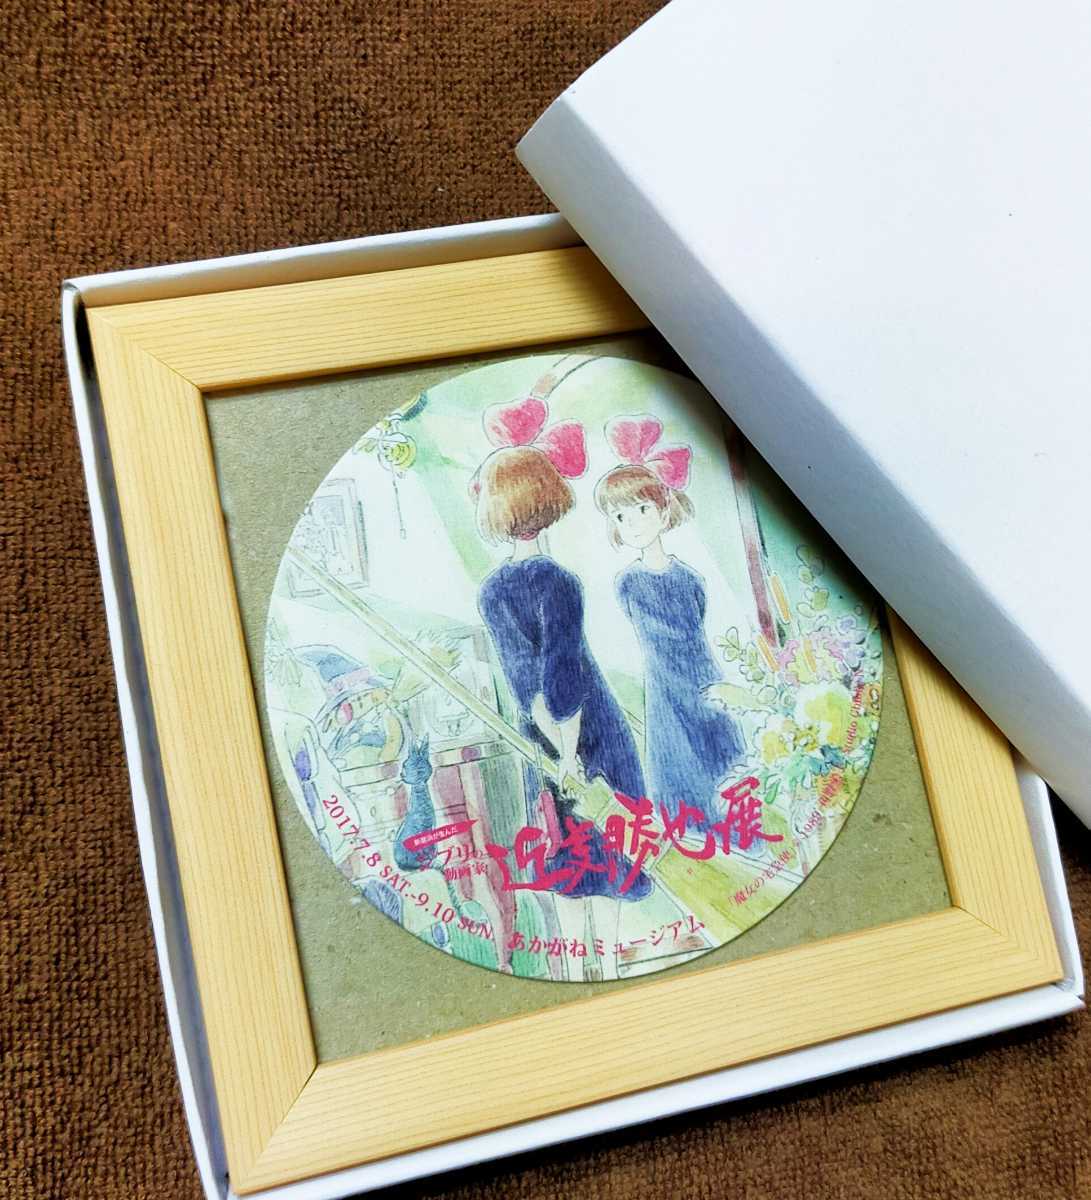 Not for sale Kiki's Delivery Service Katsuya Kondo Exhibition Exclusive coaster for visitors Studio Ghibli Postcard [Framed] Wall painting Hayao Miyazaki Isao Takahata, Ma row, Kiki's Delivery Service, others